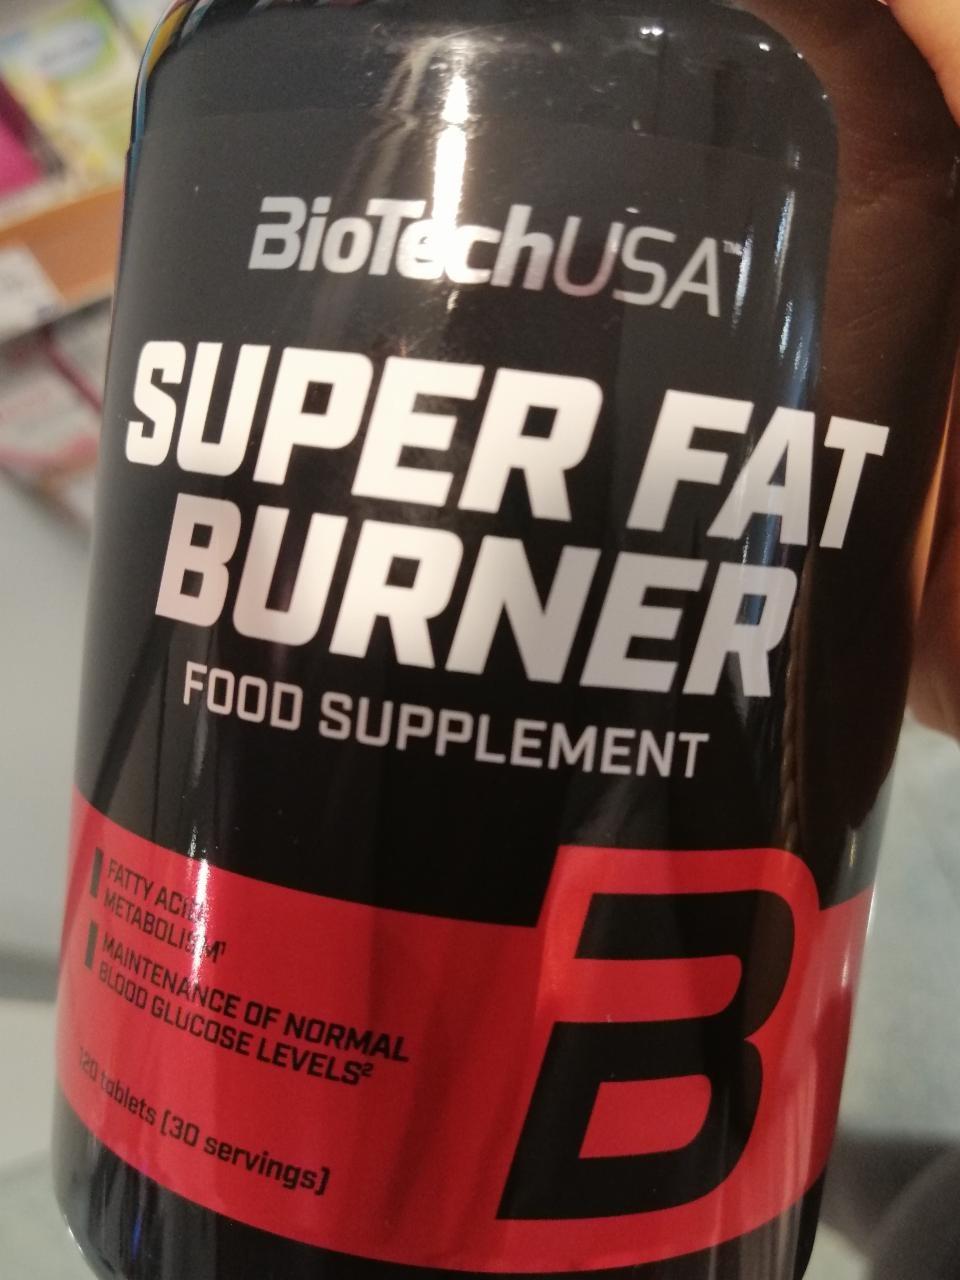 Képek - Super Fat Burner zsírégető tabletta BiotechUSA